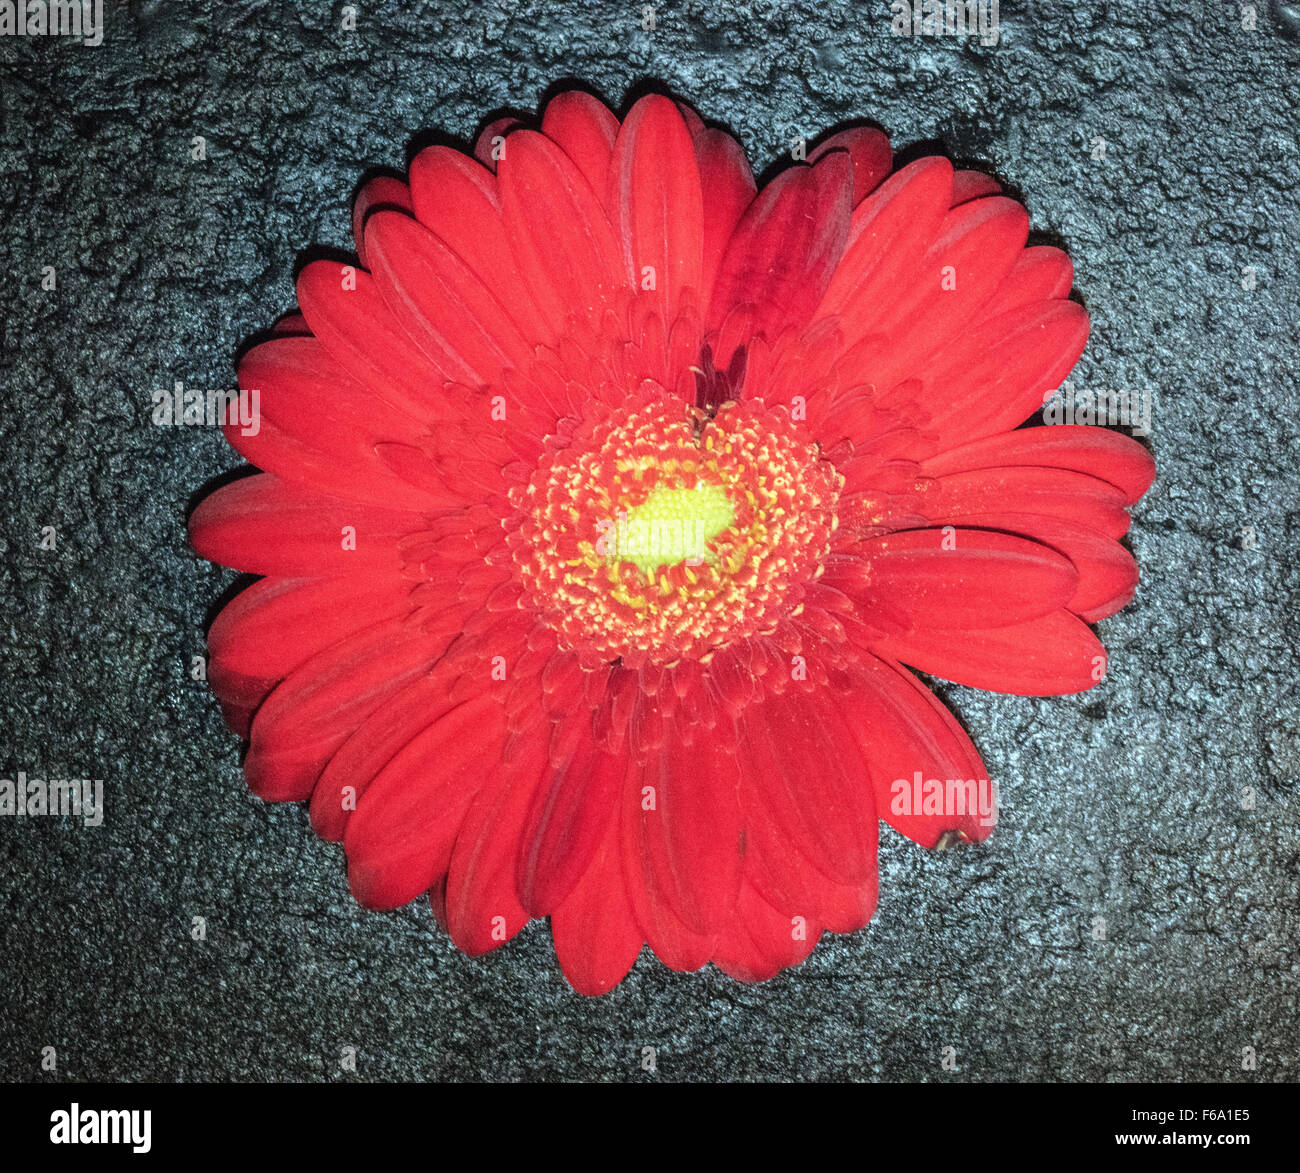 Gardenia,flores de color rojo-naranja, flor única Fotografía de stock -  Alamy